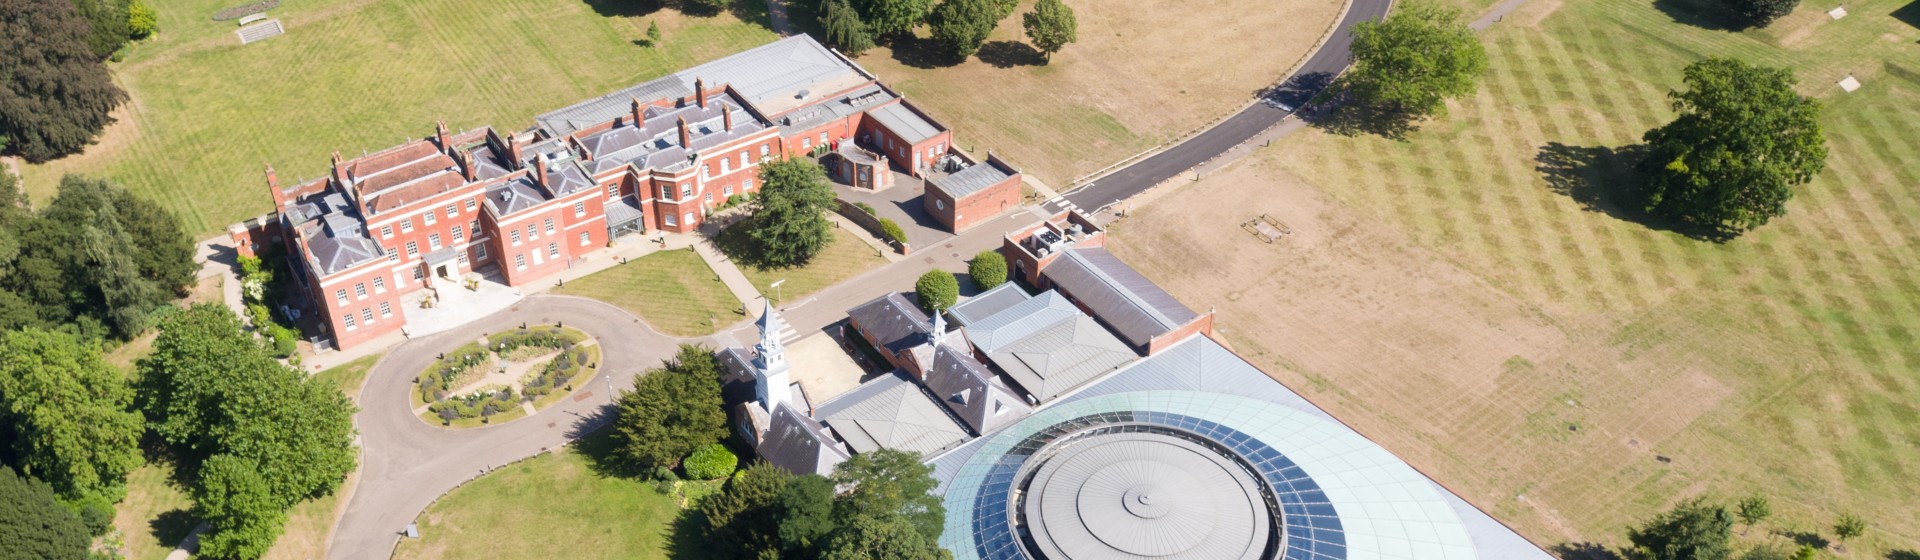 Campus Aerial Drone 2016 Hinxton Hall Conference Centre_Cropped